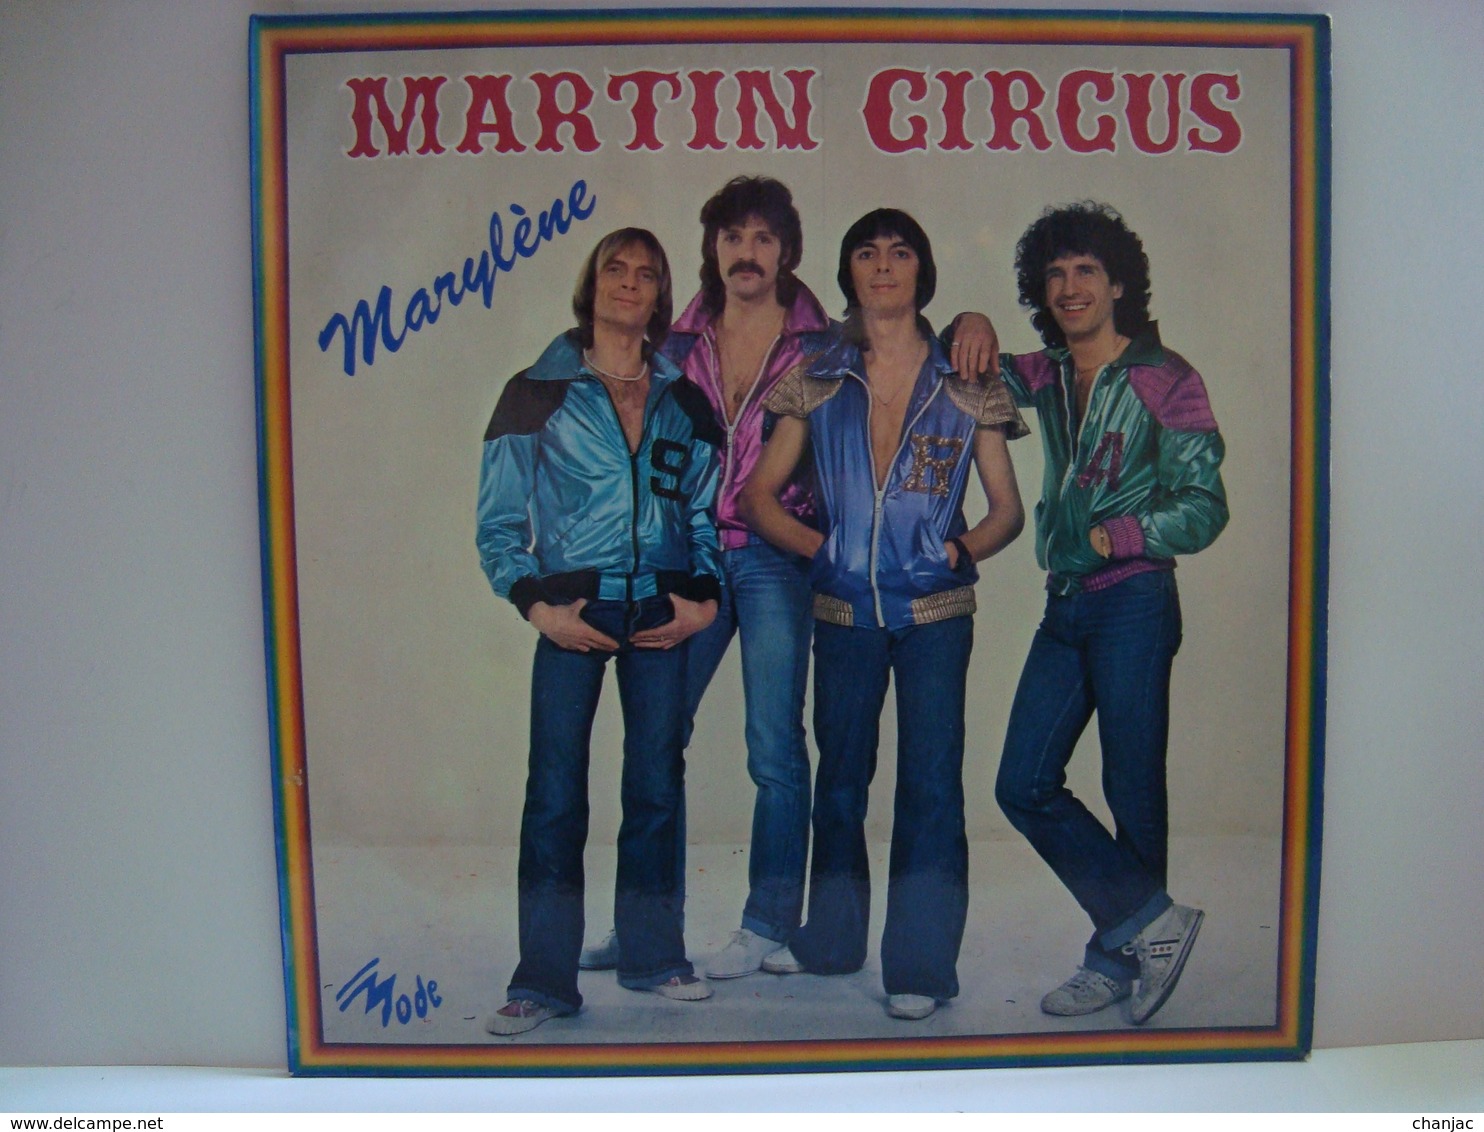 33 Tours: MARTIN CIRCUS - Marylène + 12 (Voir Scan) 1979 Vogue VG 201 MD 9032 - Collectors